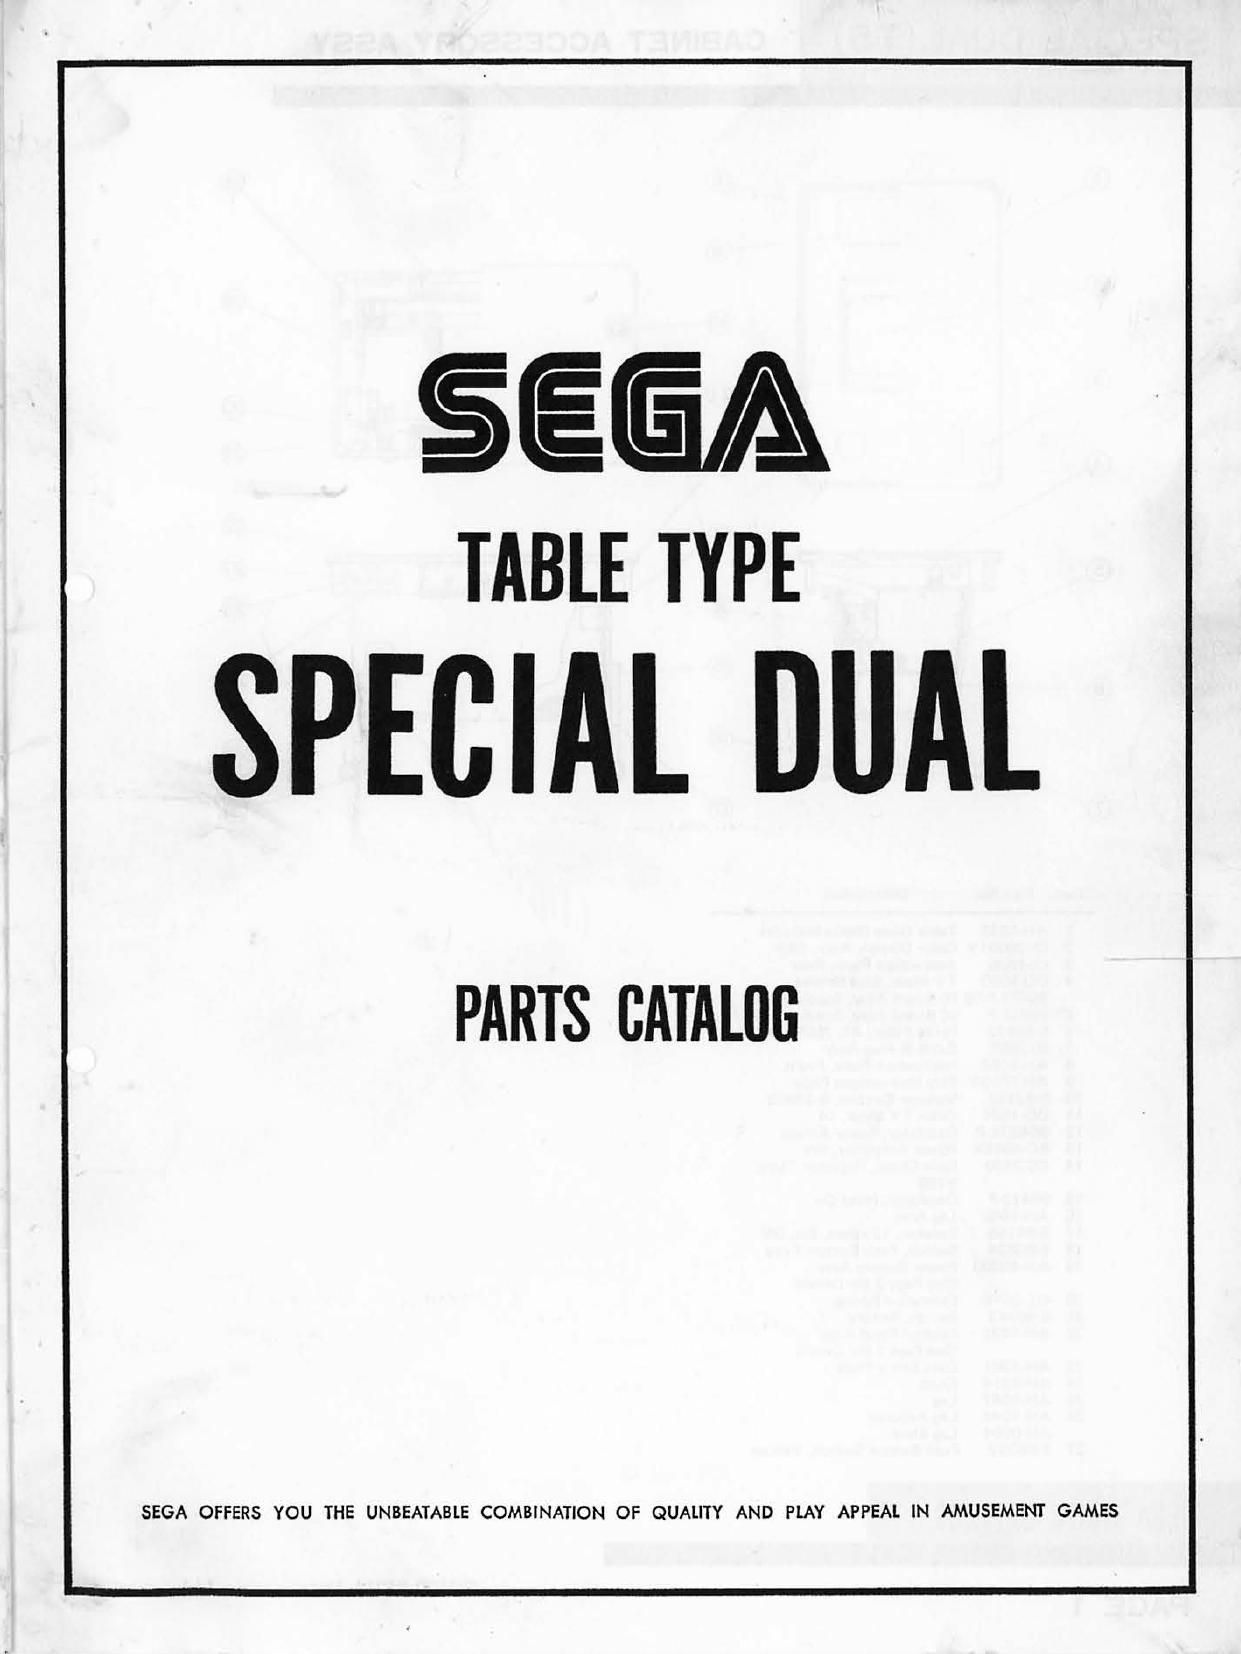 Sega Special Dual Table Type Parts Catalog